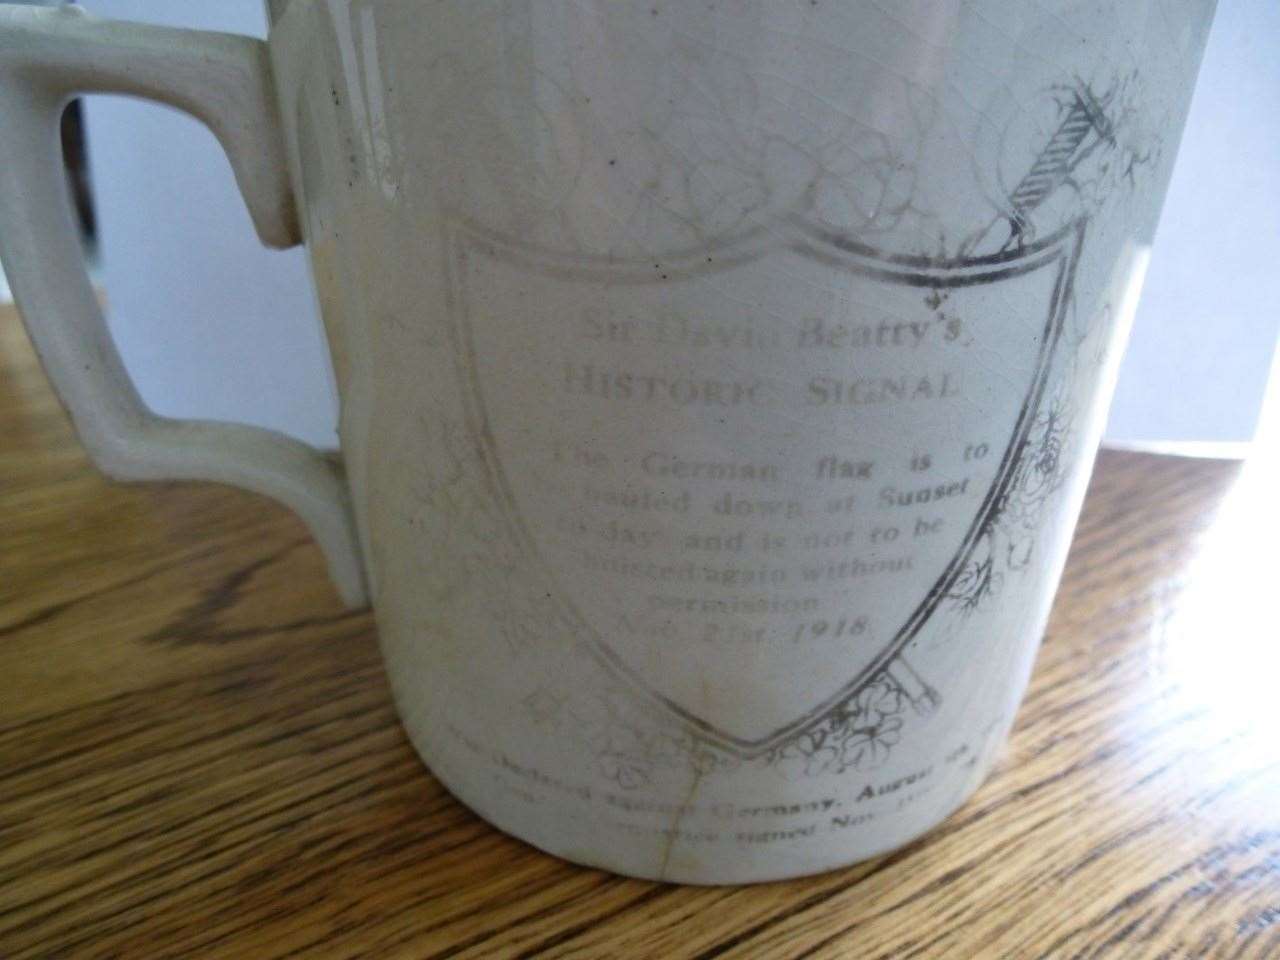 First World War Peace Mug from 1919 donated to Newington school children